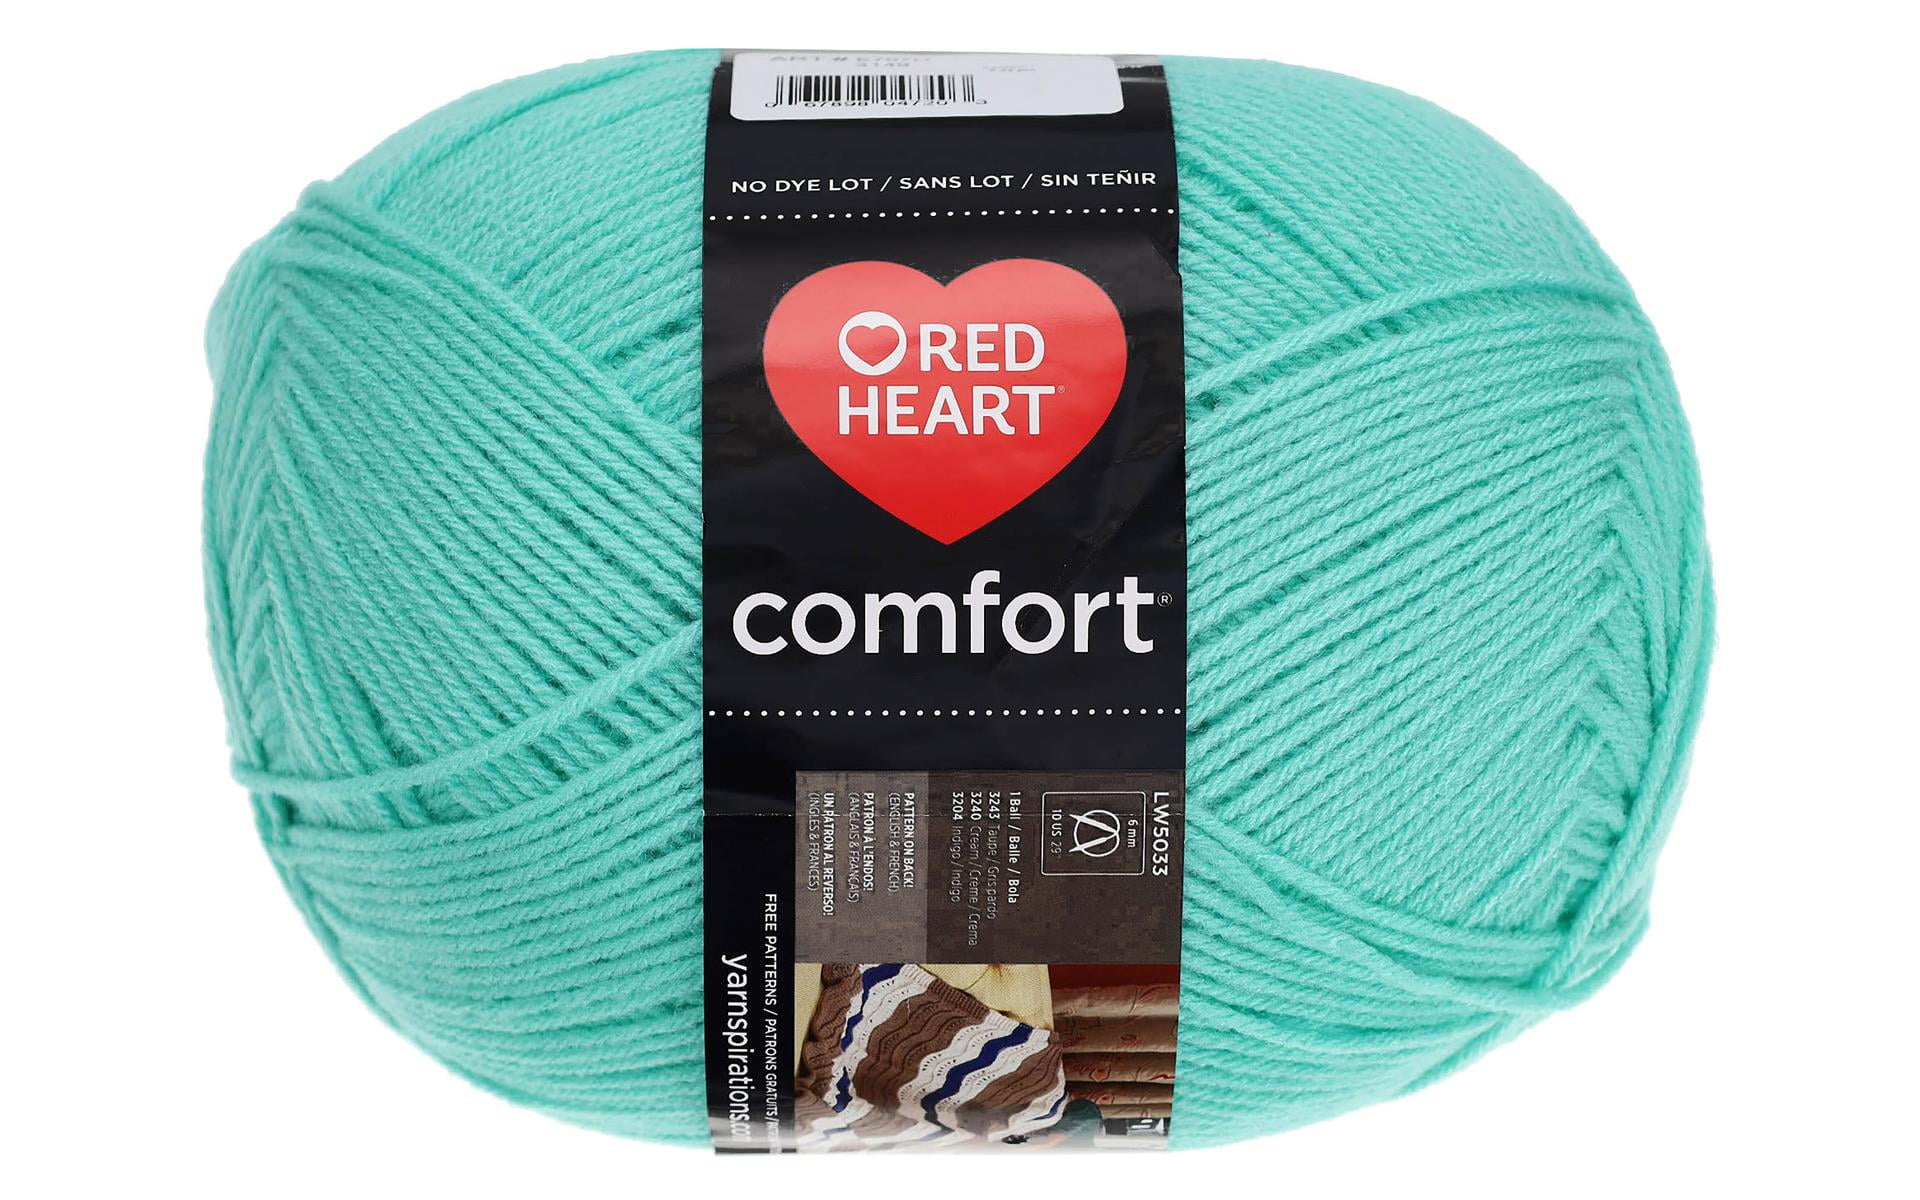 Red Heart Comfort Yarn - Indigo